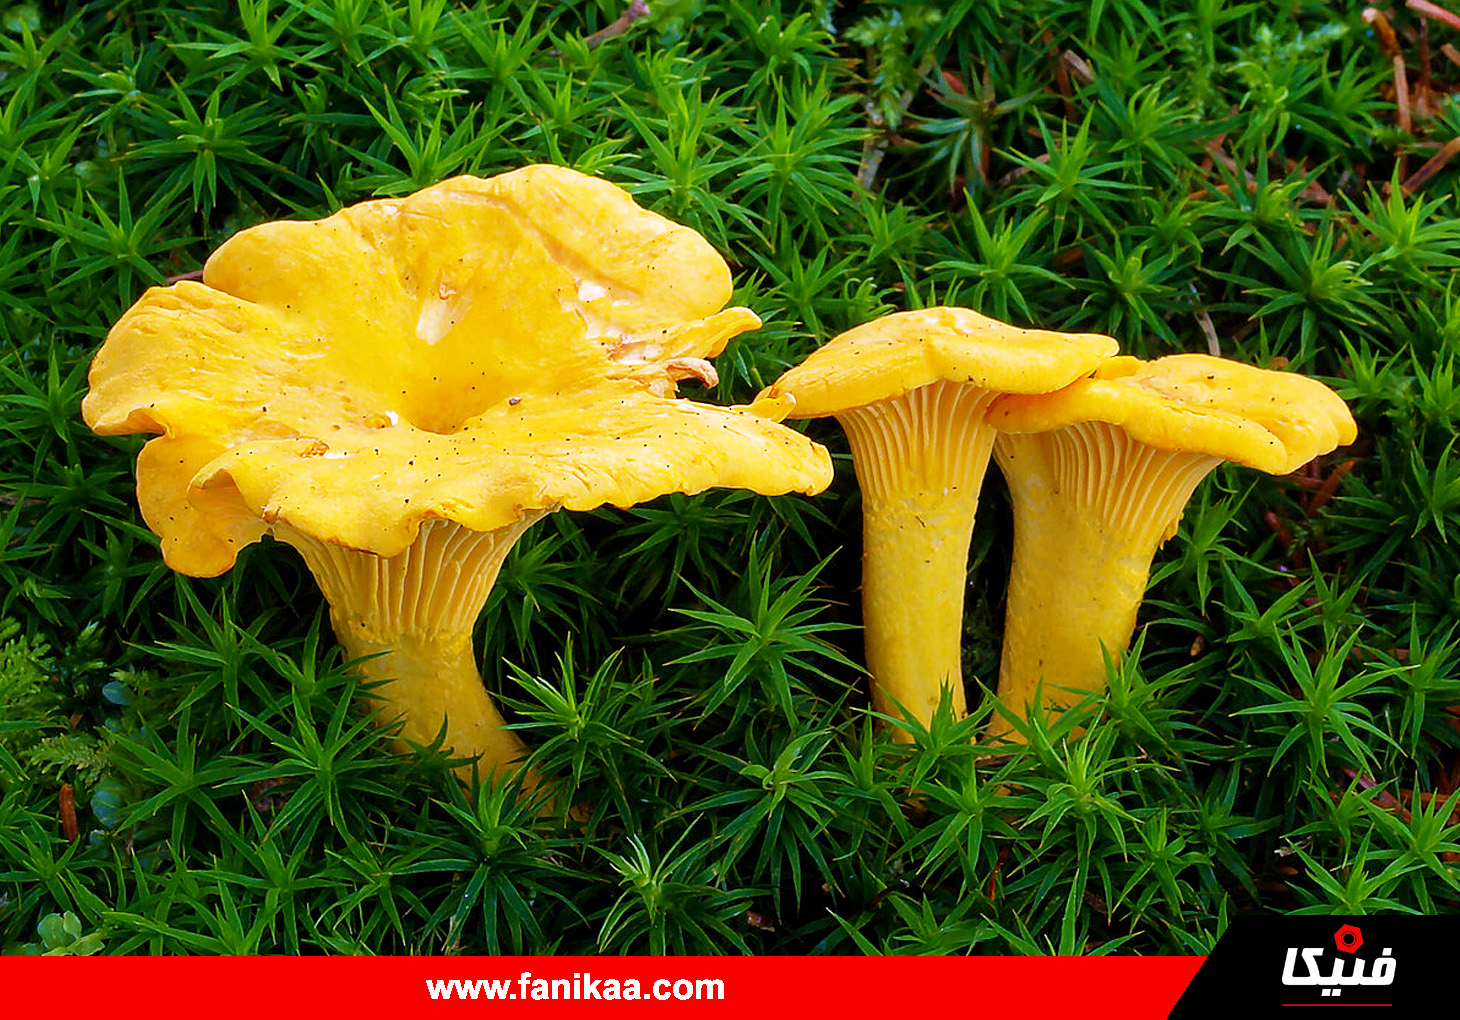 Cantharellus_fanikaa-01 فنیکا قارچ زرد کیجا چه نوع قارچی